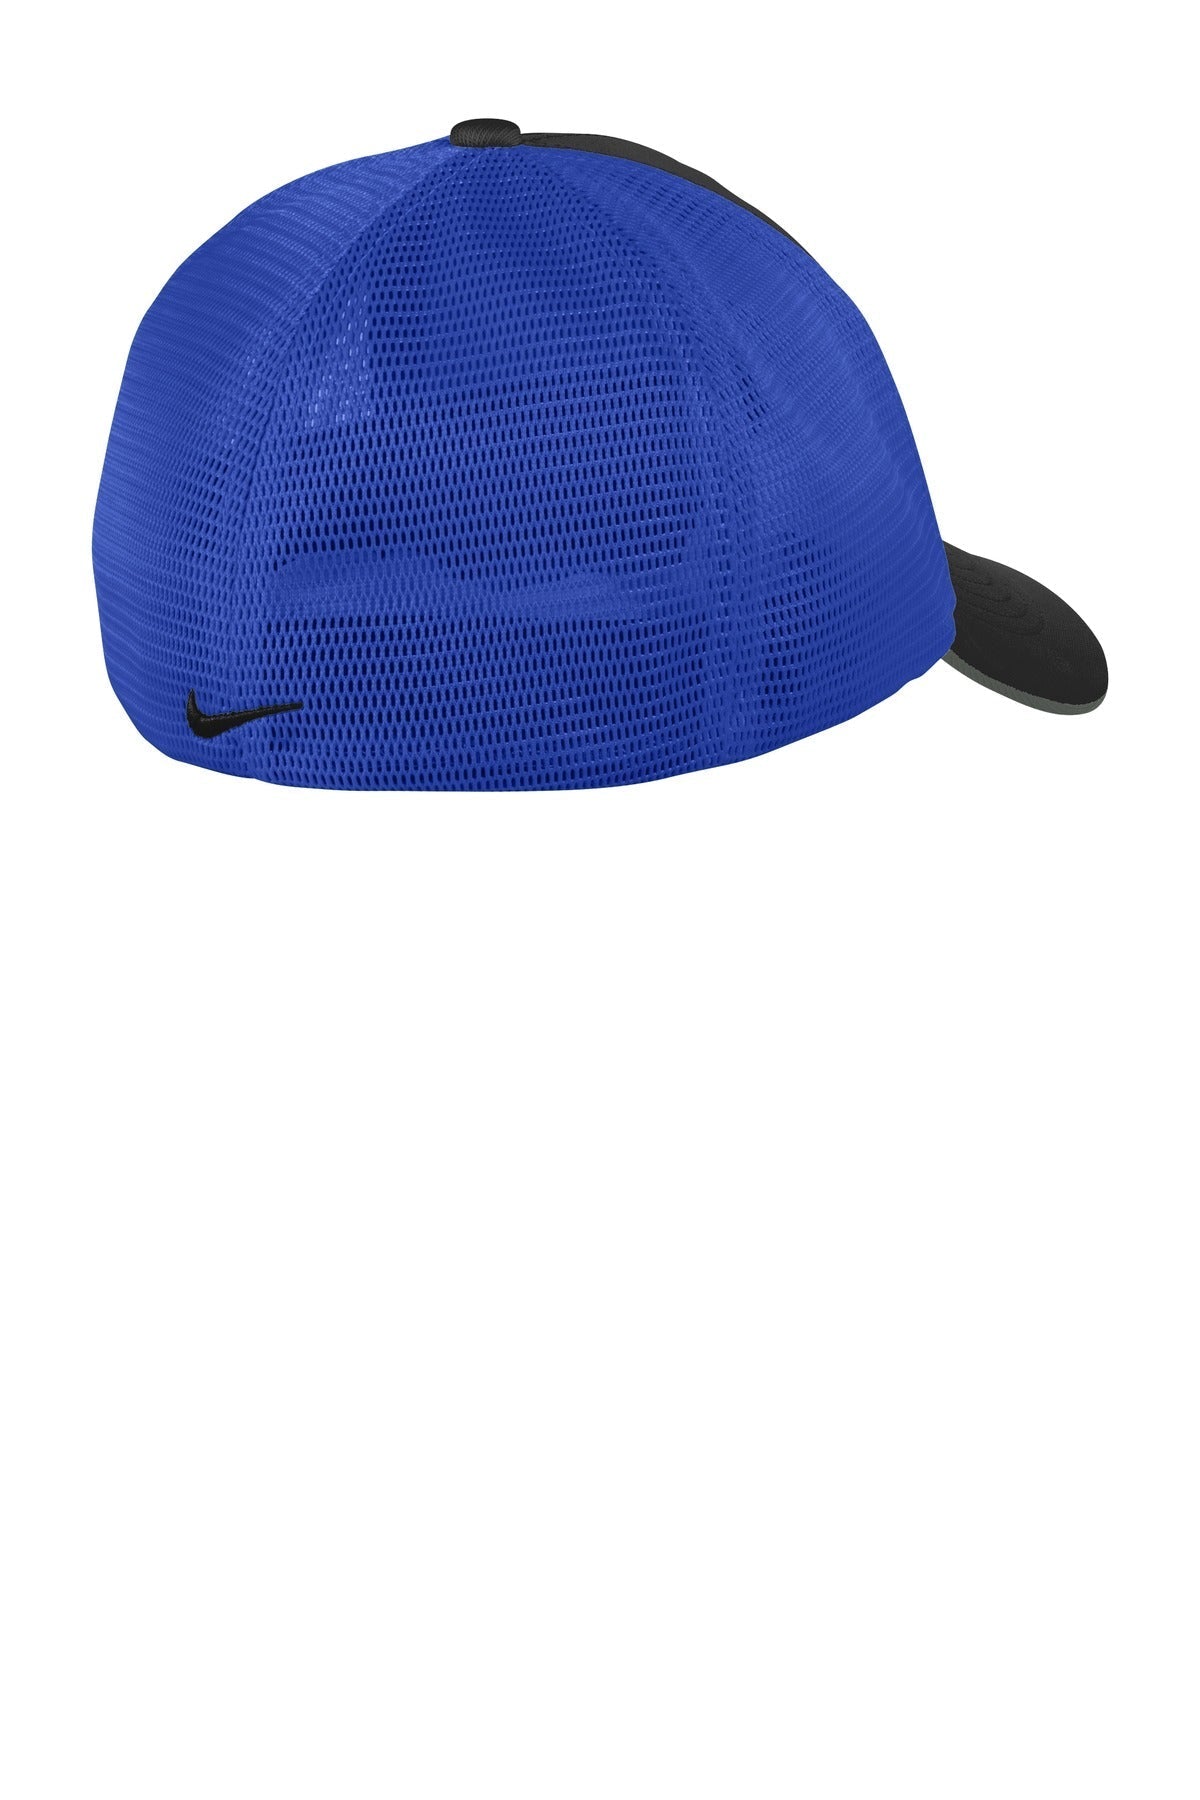 Nike Dri-FIT Mesh Back Cap. NKAO9293 - BT Imprintables Shirts